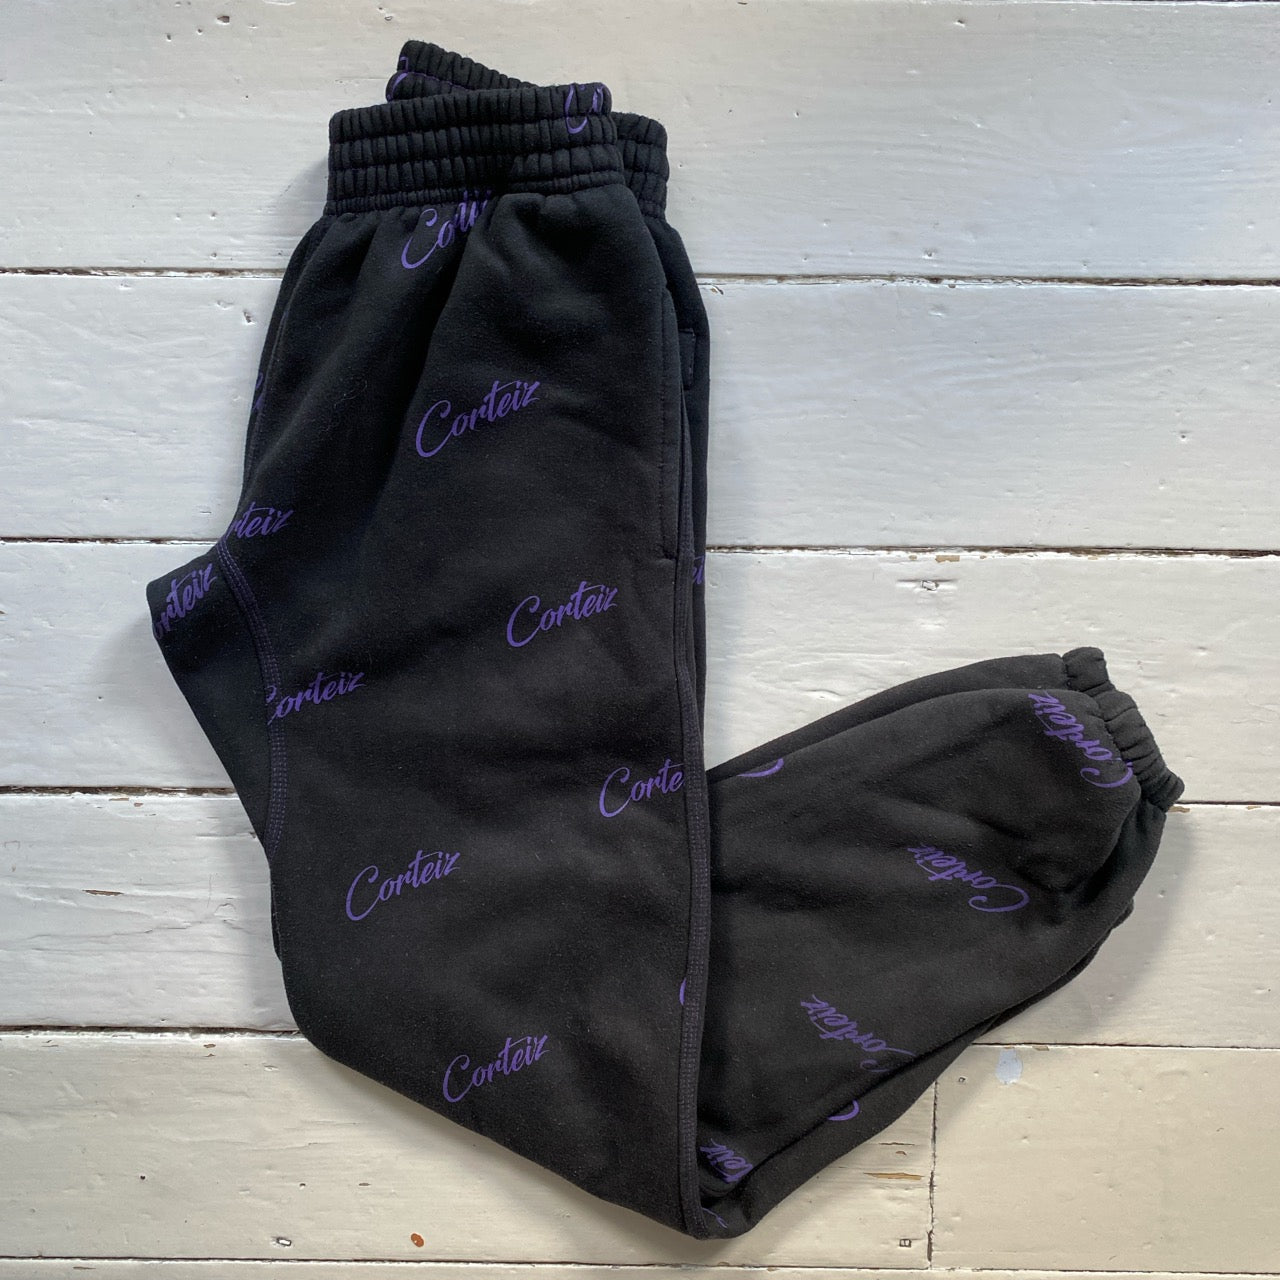 Corteiz Black and Purple Joggers (Medium)